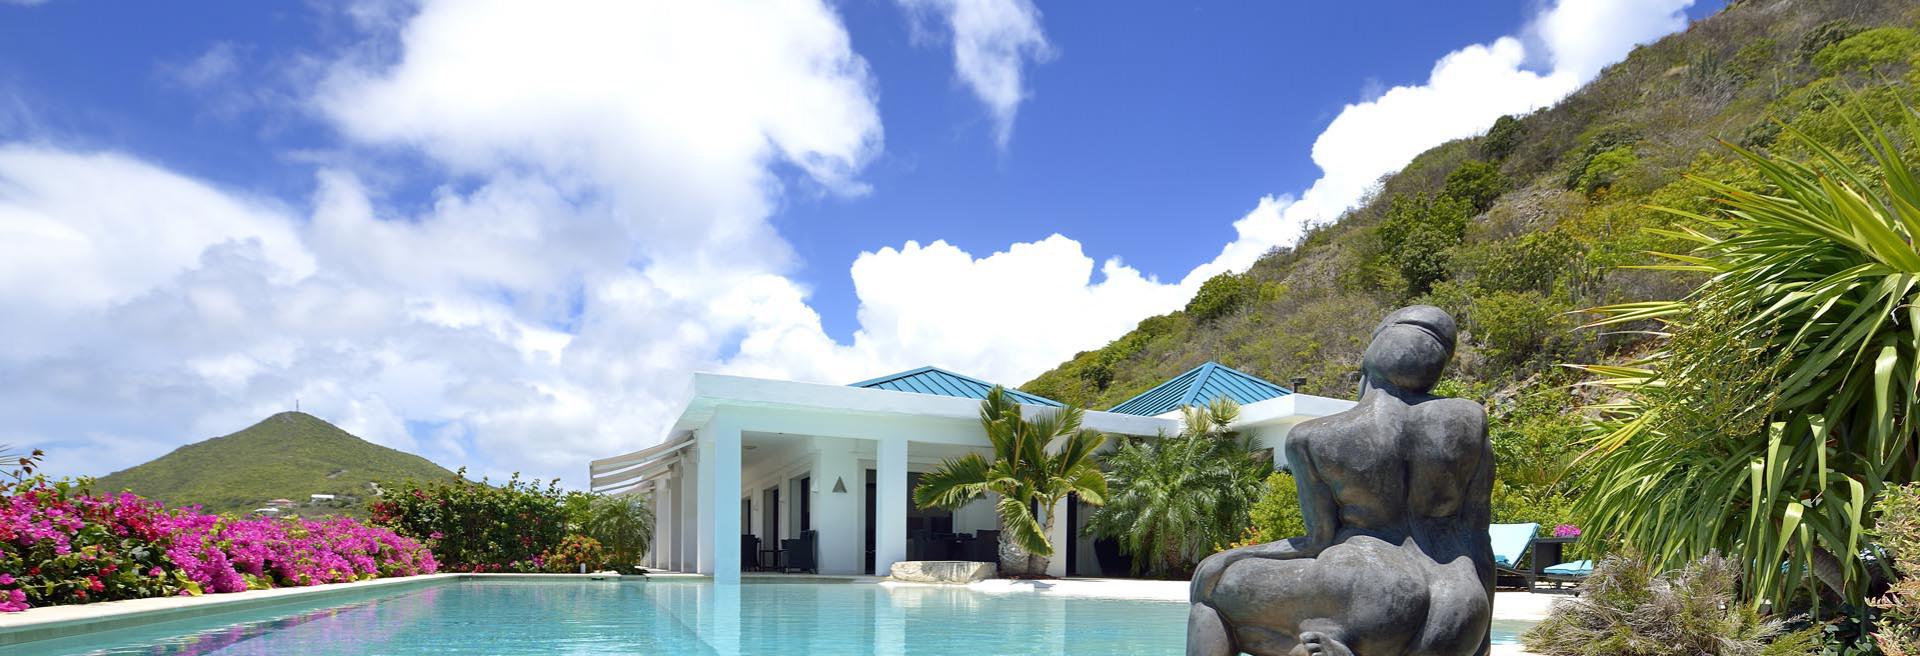 Villa Movina, Oyster Pond, St.Maarten - Golden Coast Real Estate